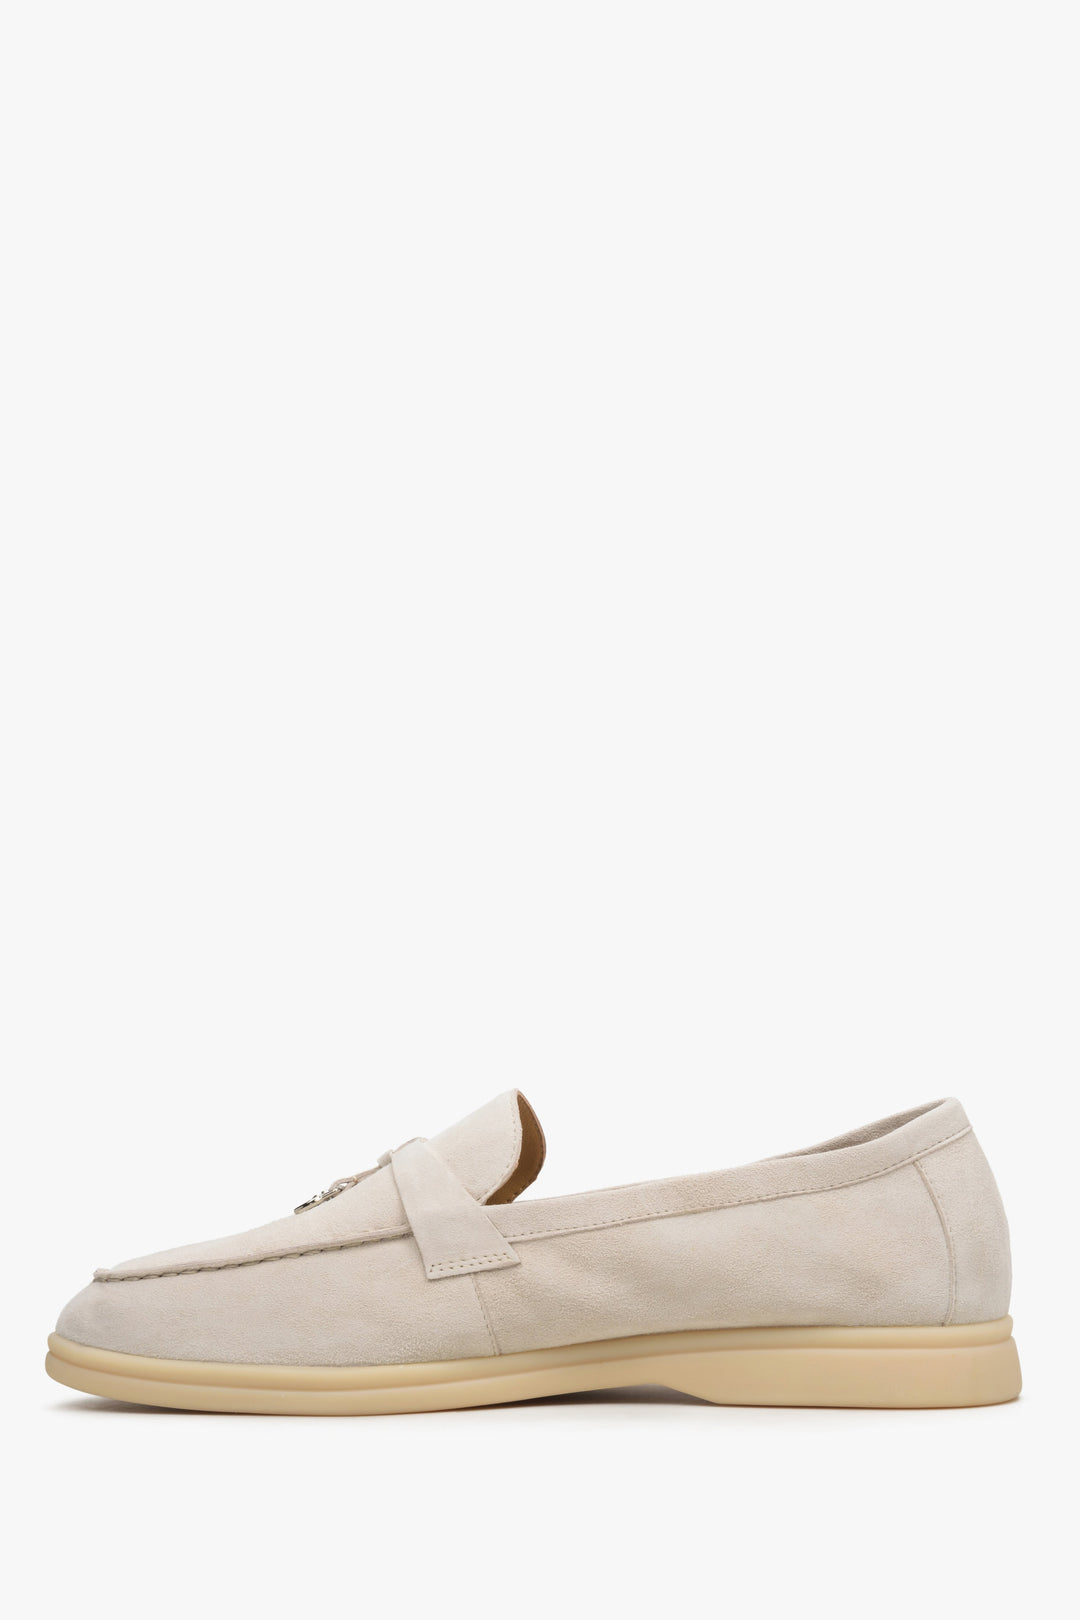 Estro cream beige velour loafers - shoe sideline.